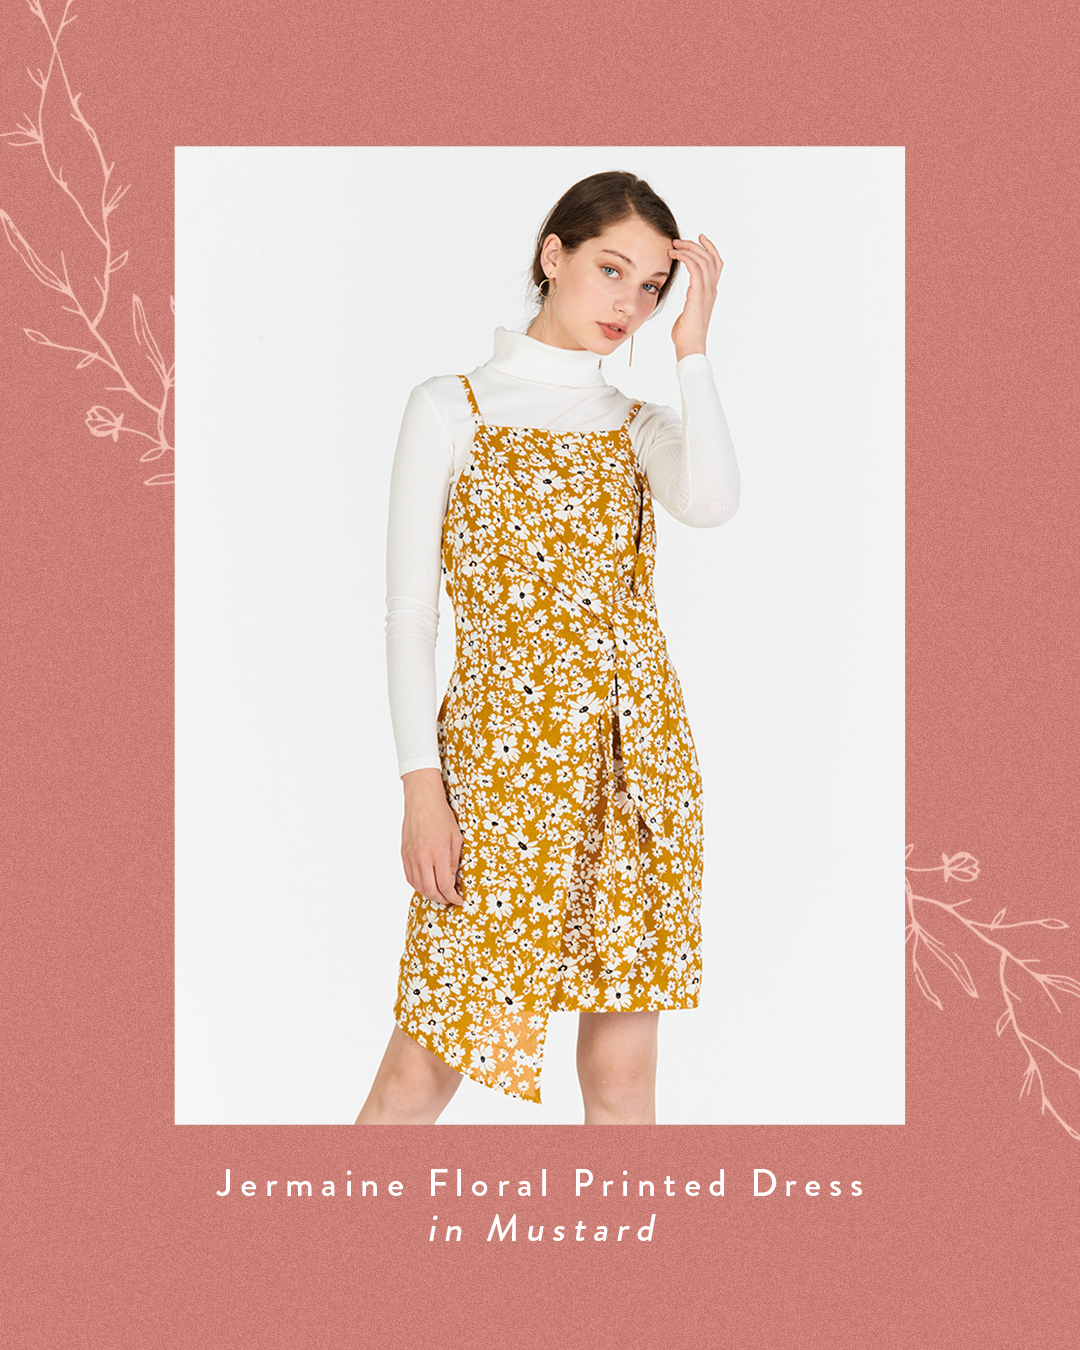 Jermaine Floral Printed Dress